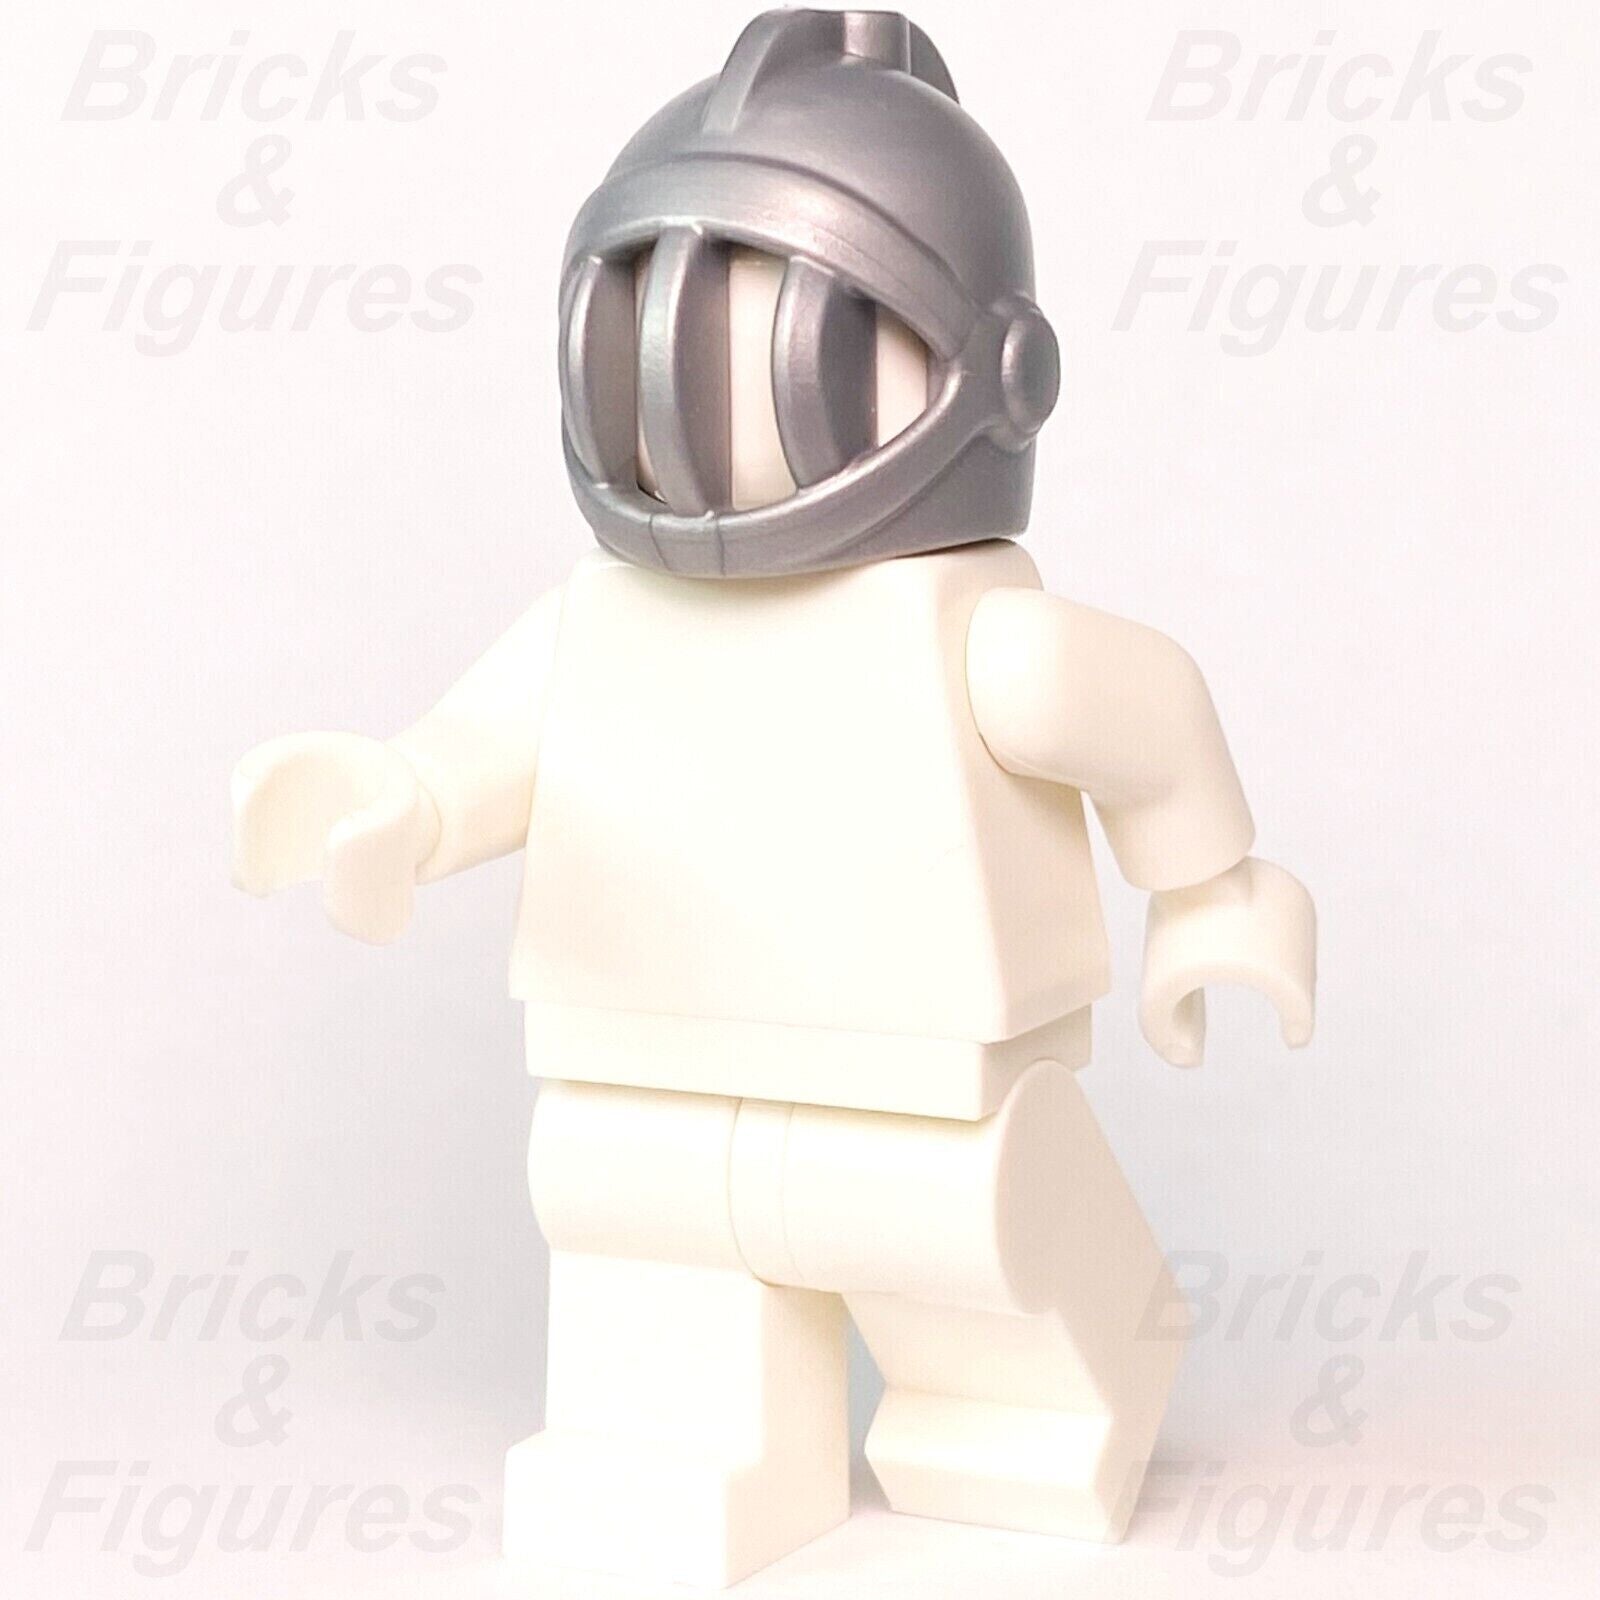 LEGO Castle Knight Fixed Face Grille Helmet Minifigure Part X167 59858 4503 New - Bricks & Figures